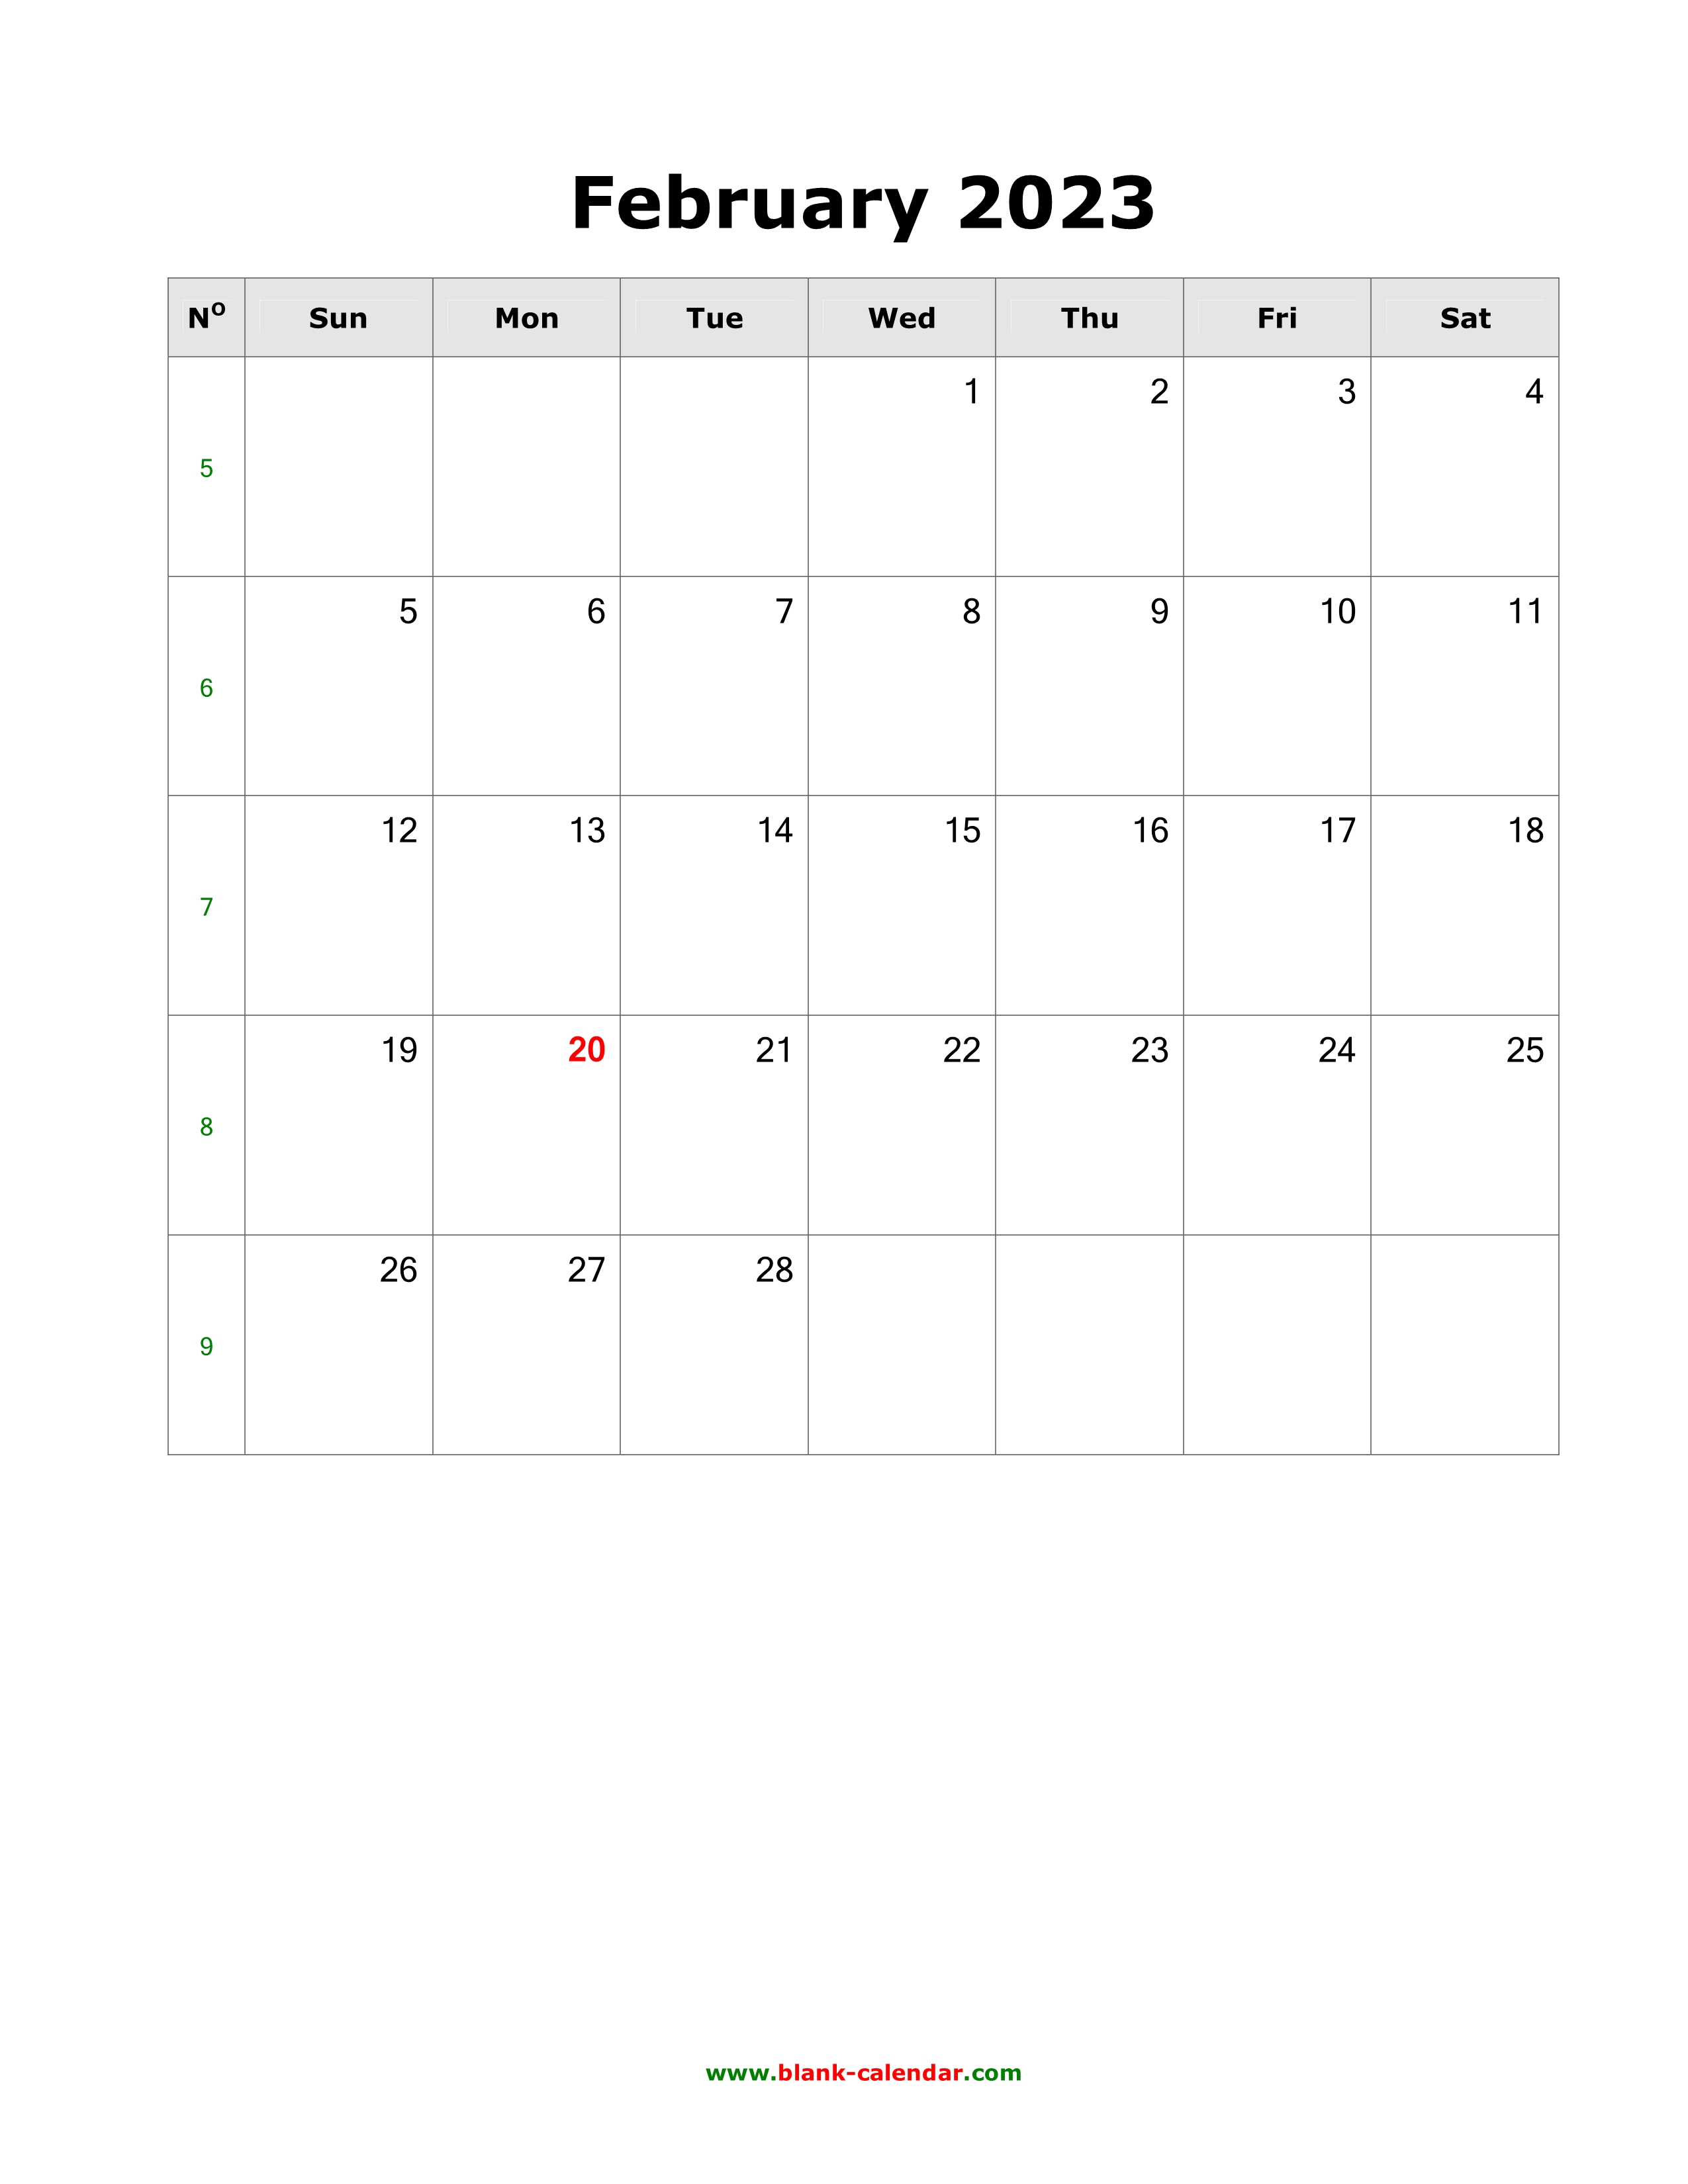 Download February 2023 Blank Calendar Vertical